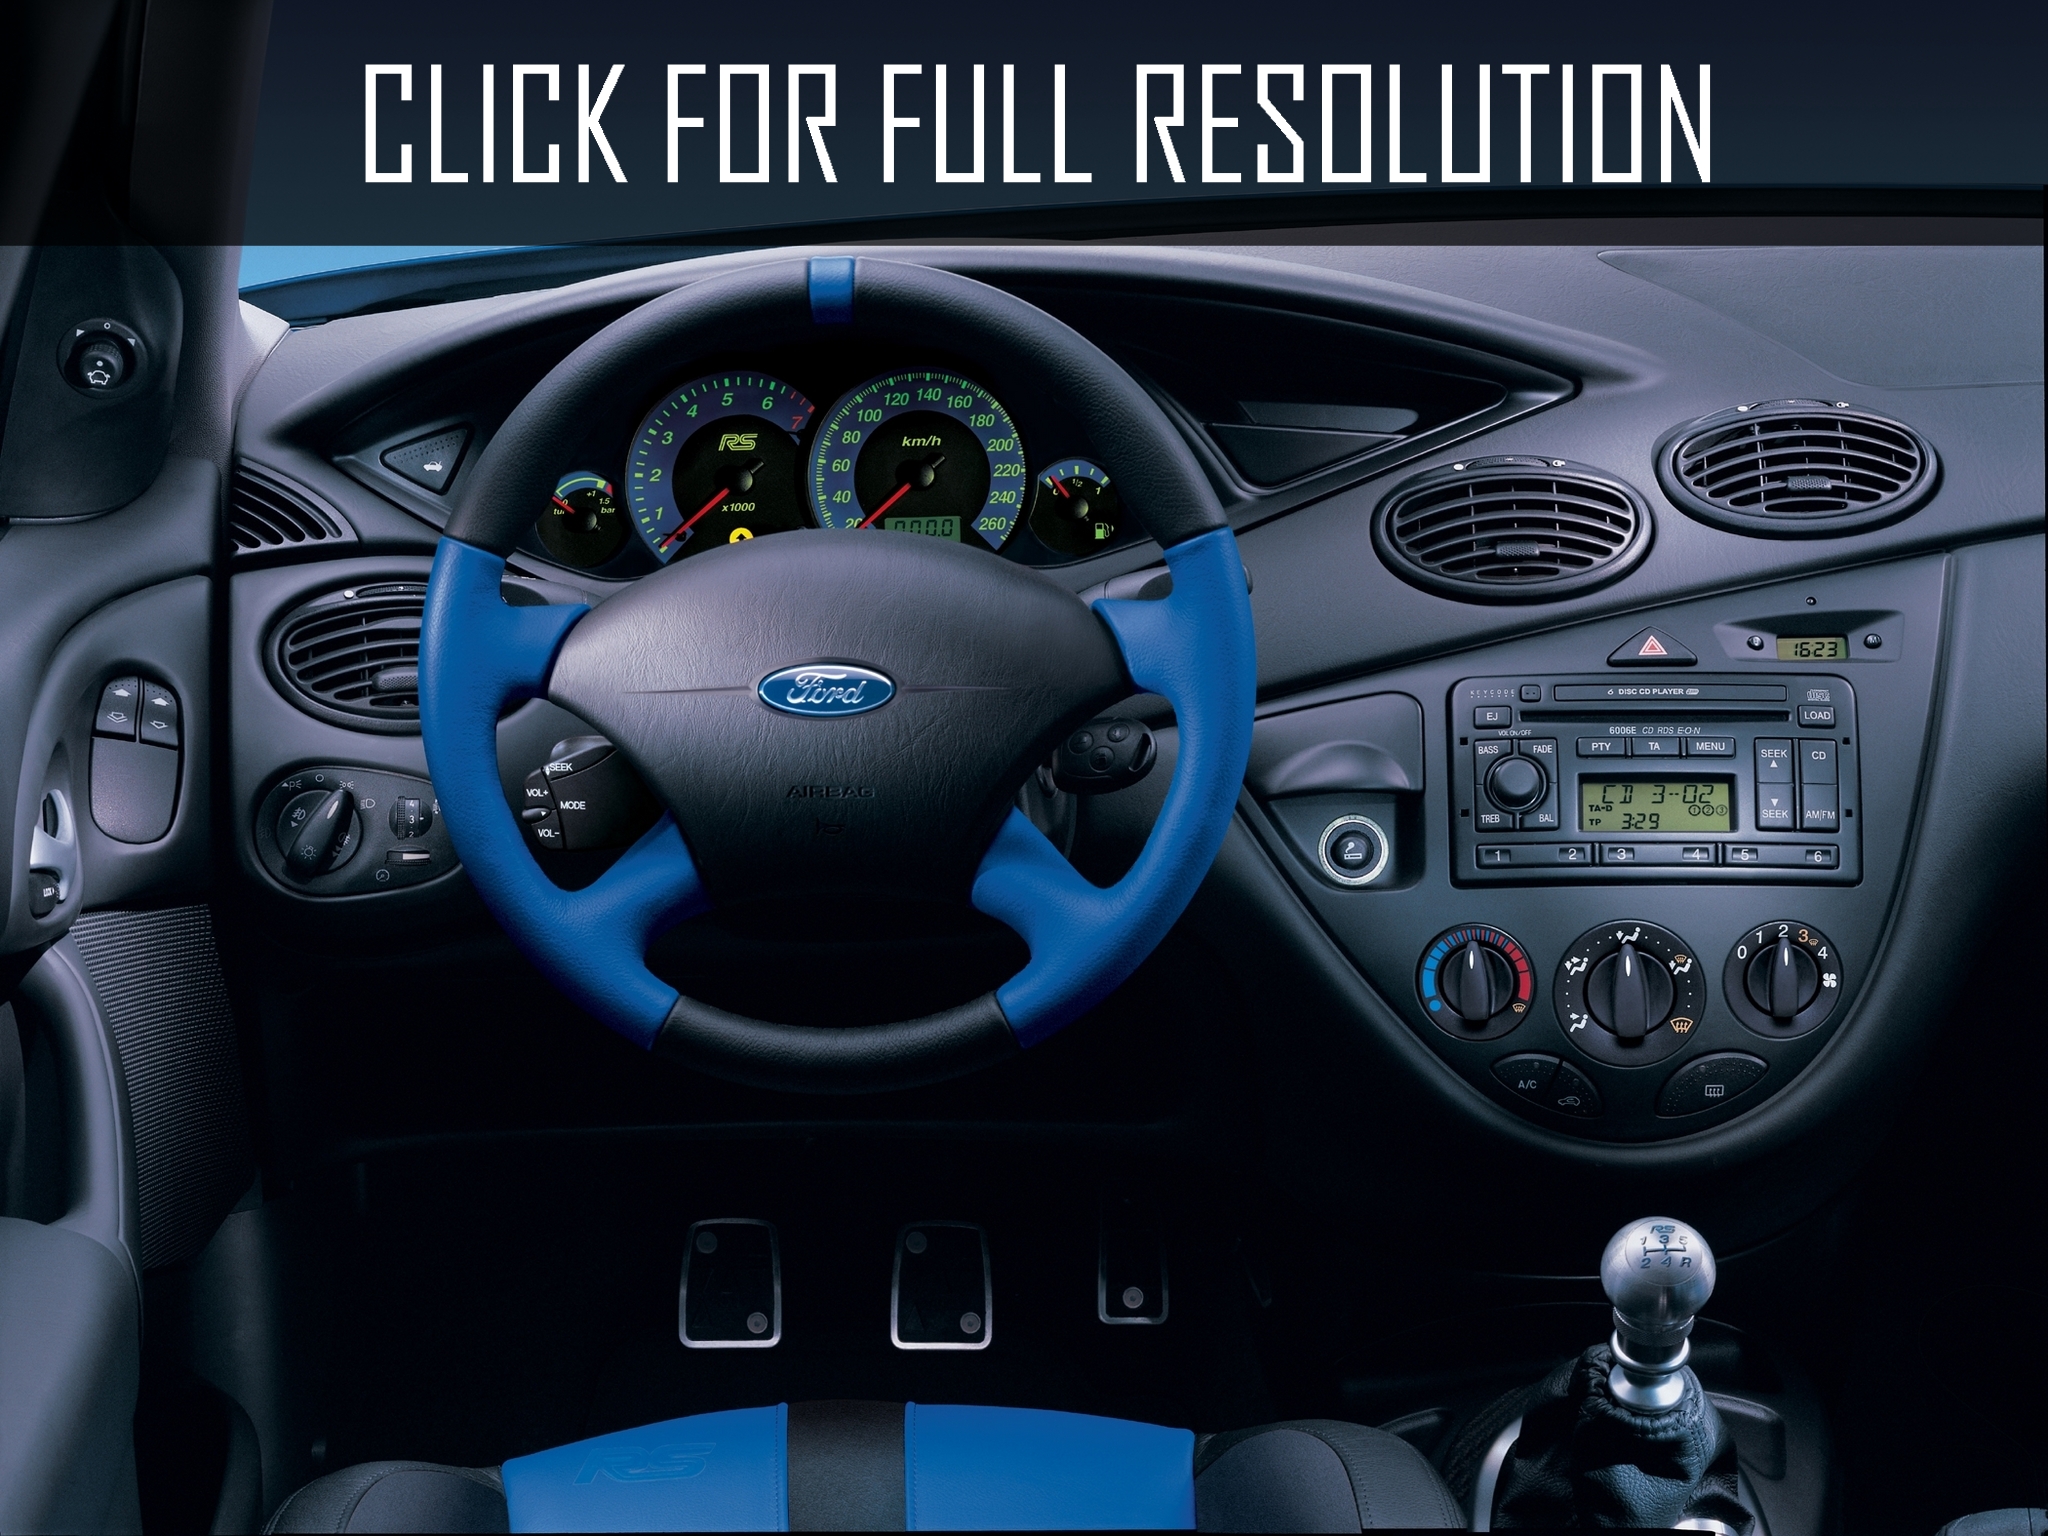 Ford Focus Econetic 1.6 TDCI